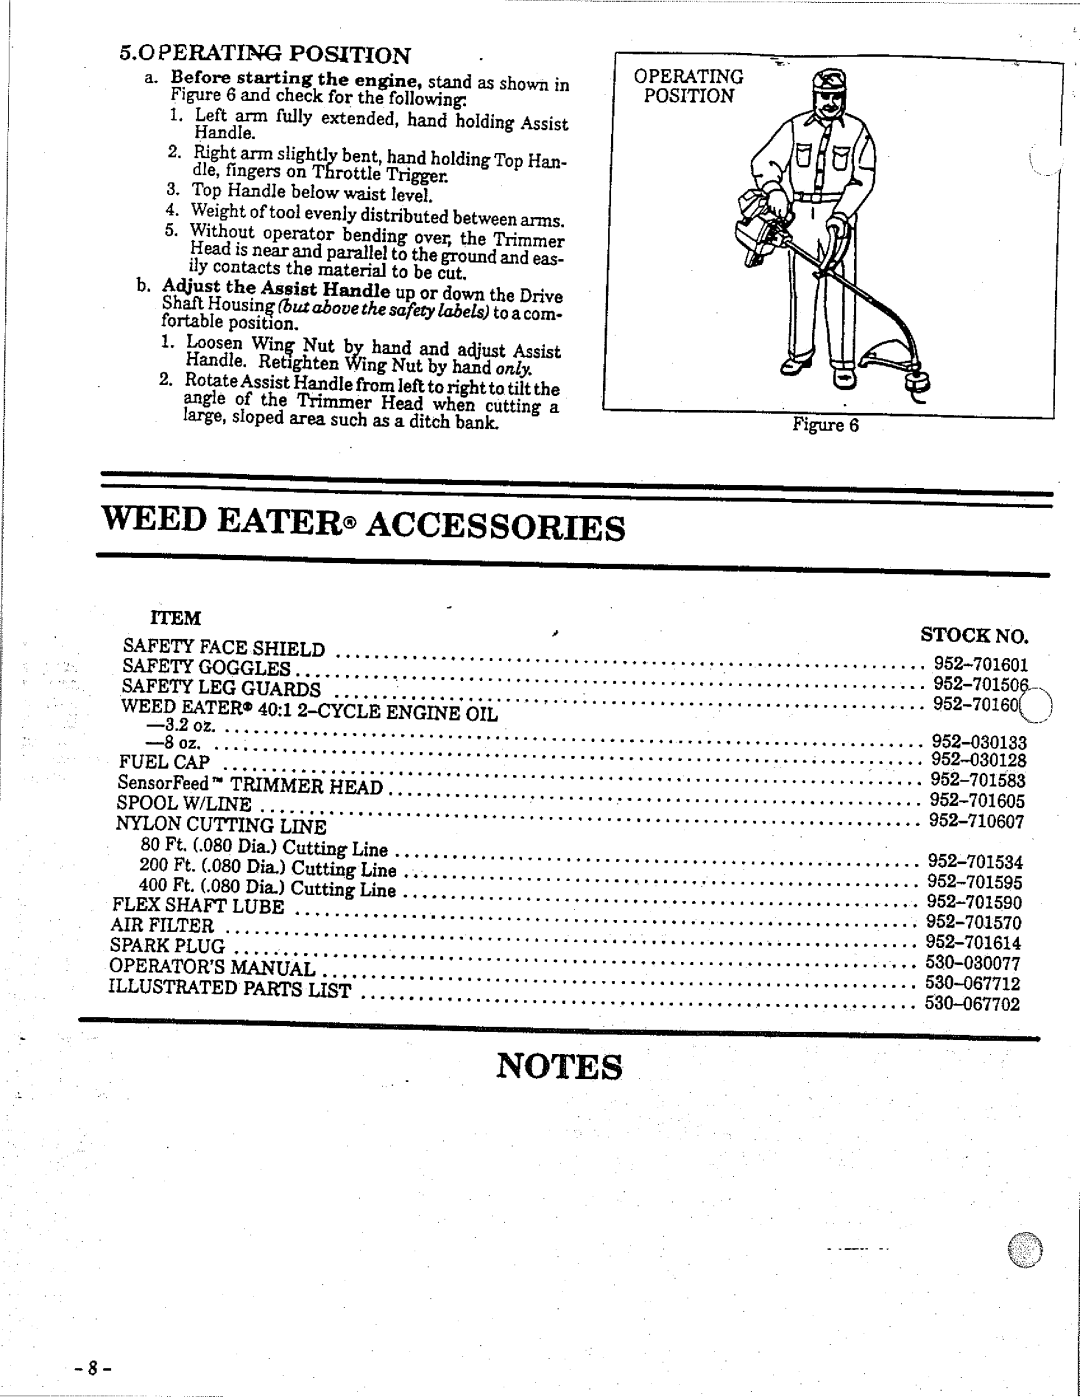 Weed Eater GTI 16 SUPER manual 